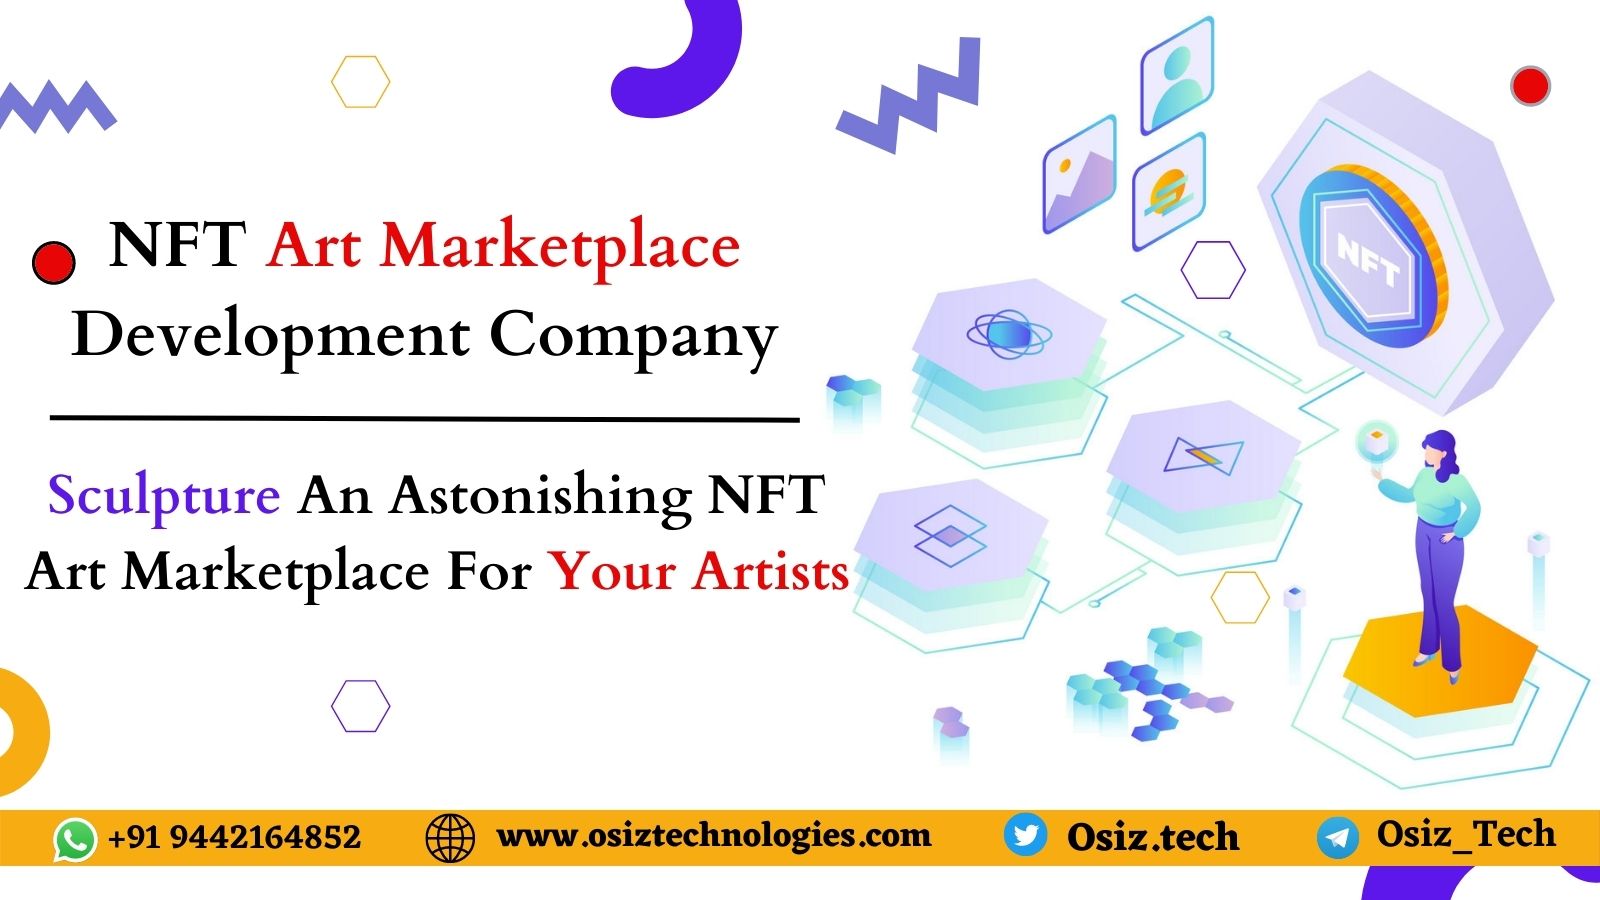 NFT Art Marketplace